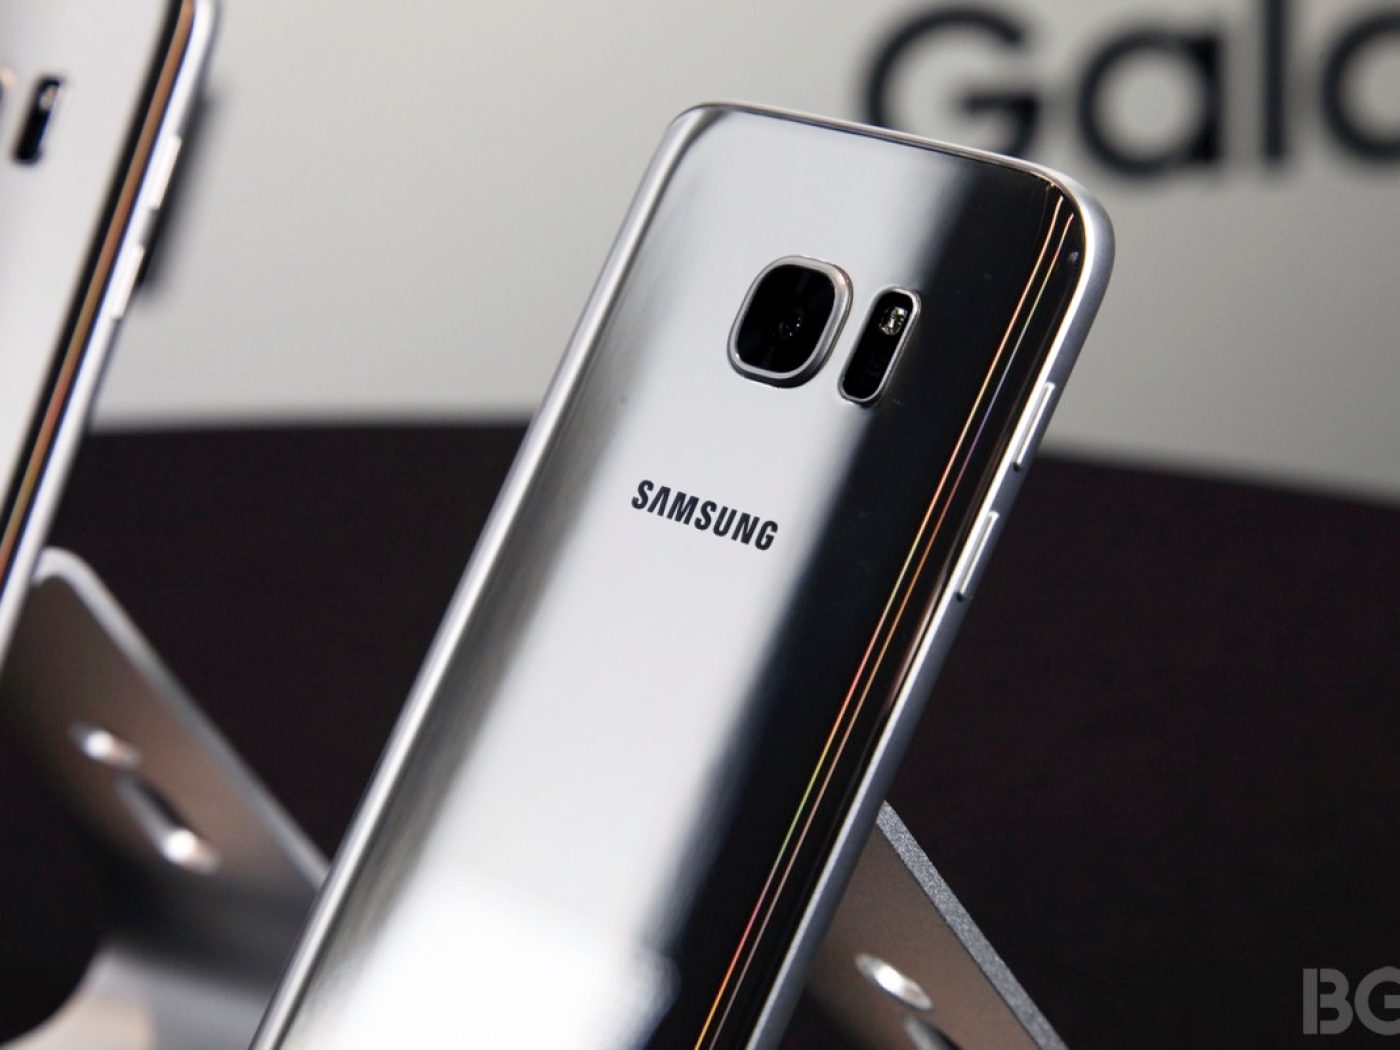 Samsung to Acquire Viv, the Next Generation Artificial